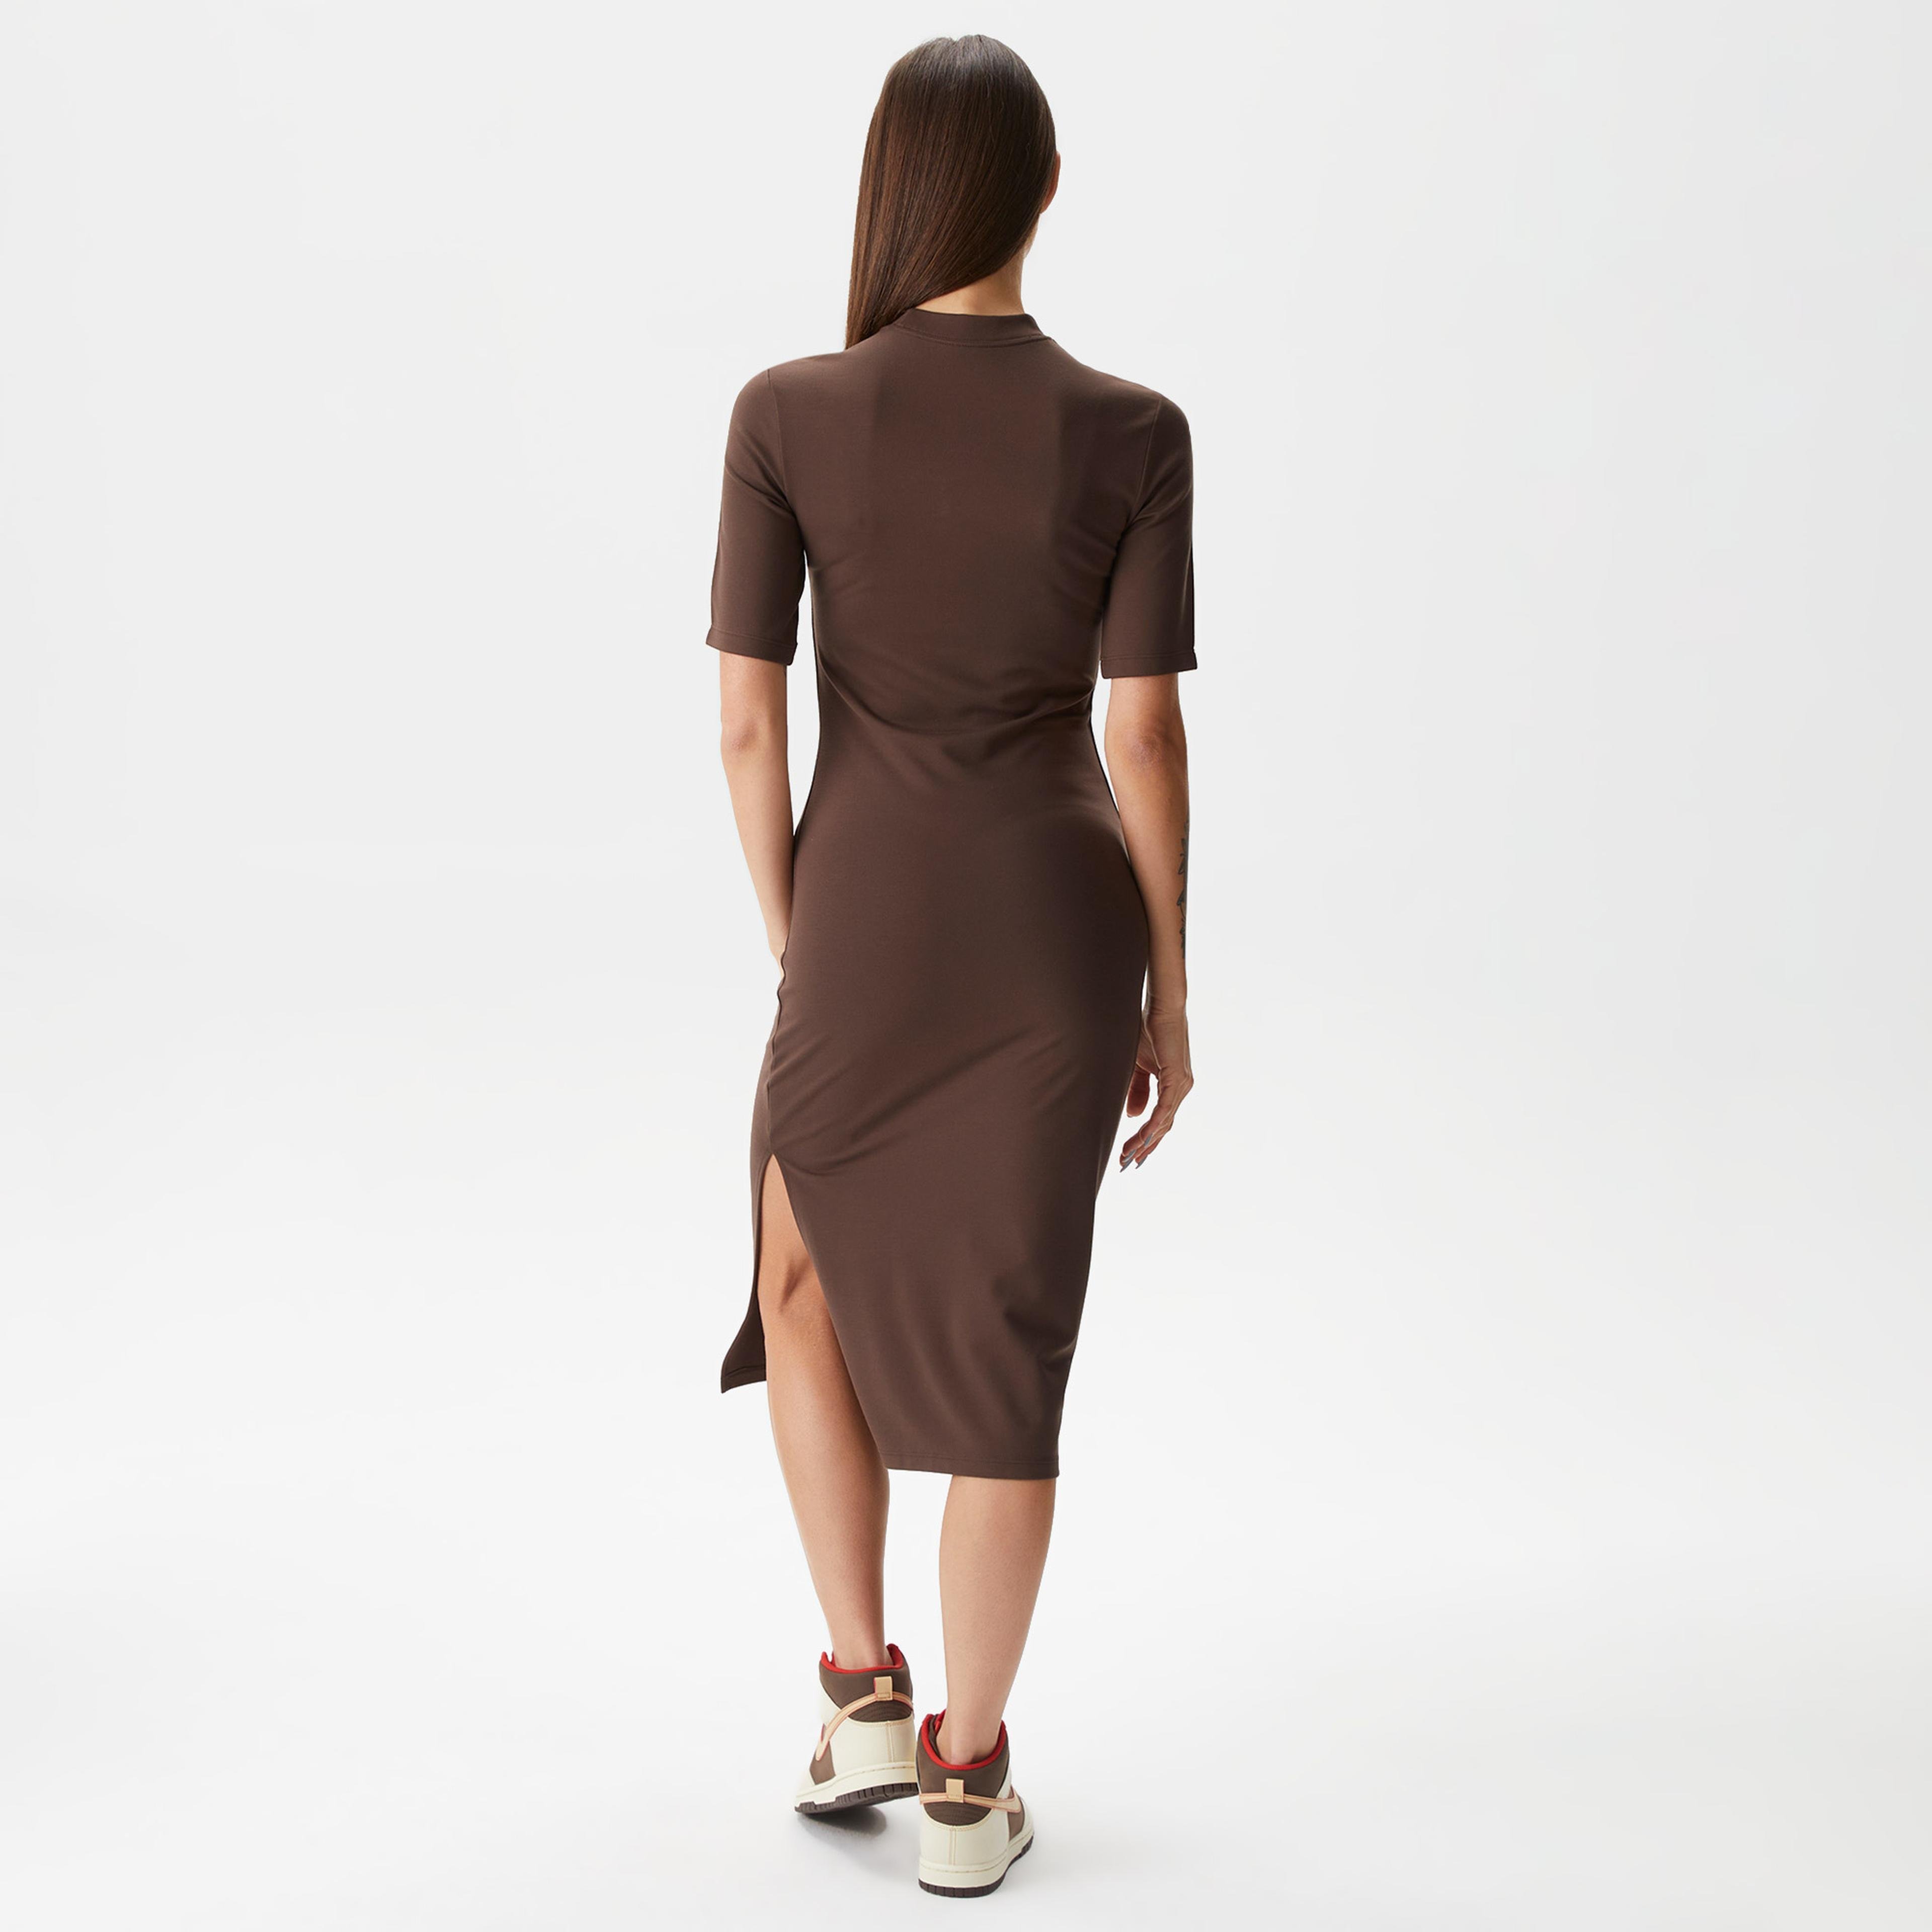 Nike Sportswear Chill Knit Sportswear Kadın Kahverengi Elbise